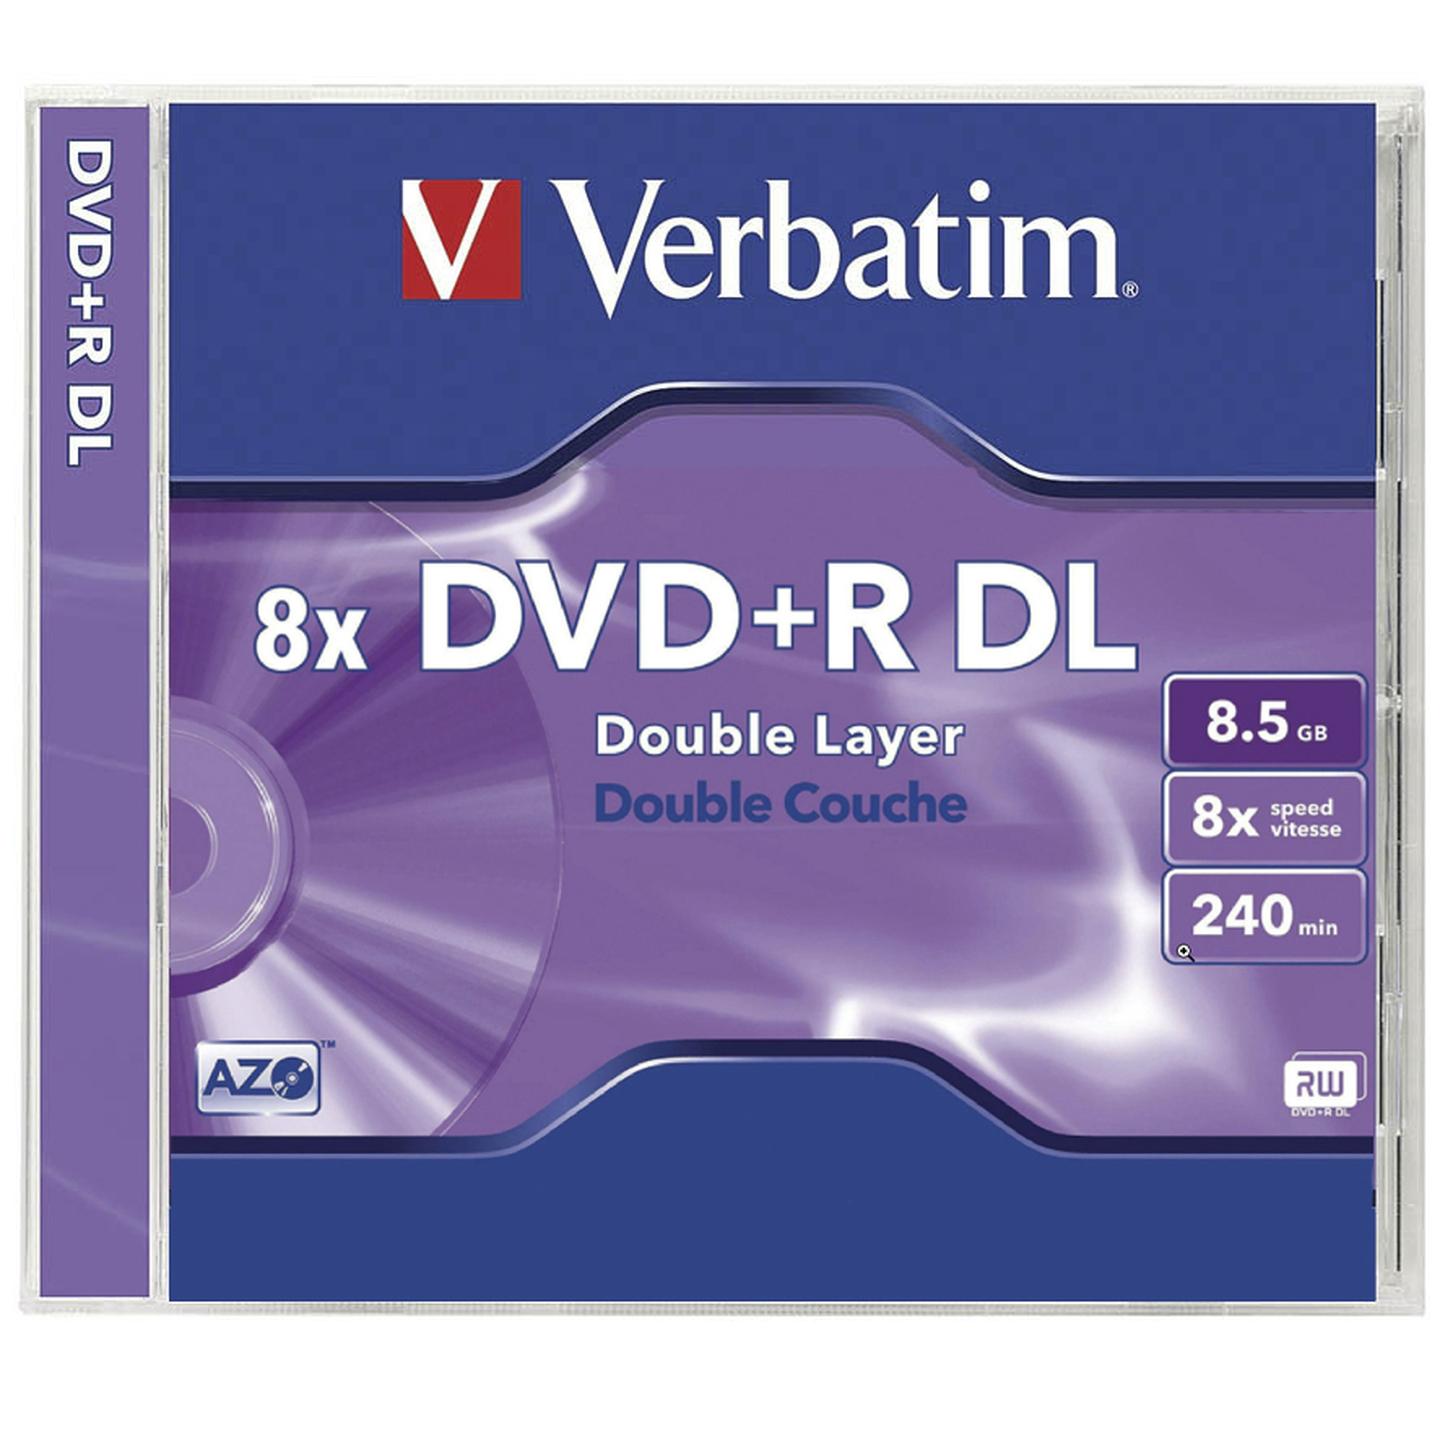 Verbatim DataLifePlus Azo DVDR DL 8.5GB Jewel Case Singles 8x